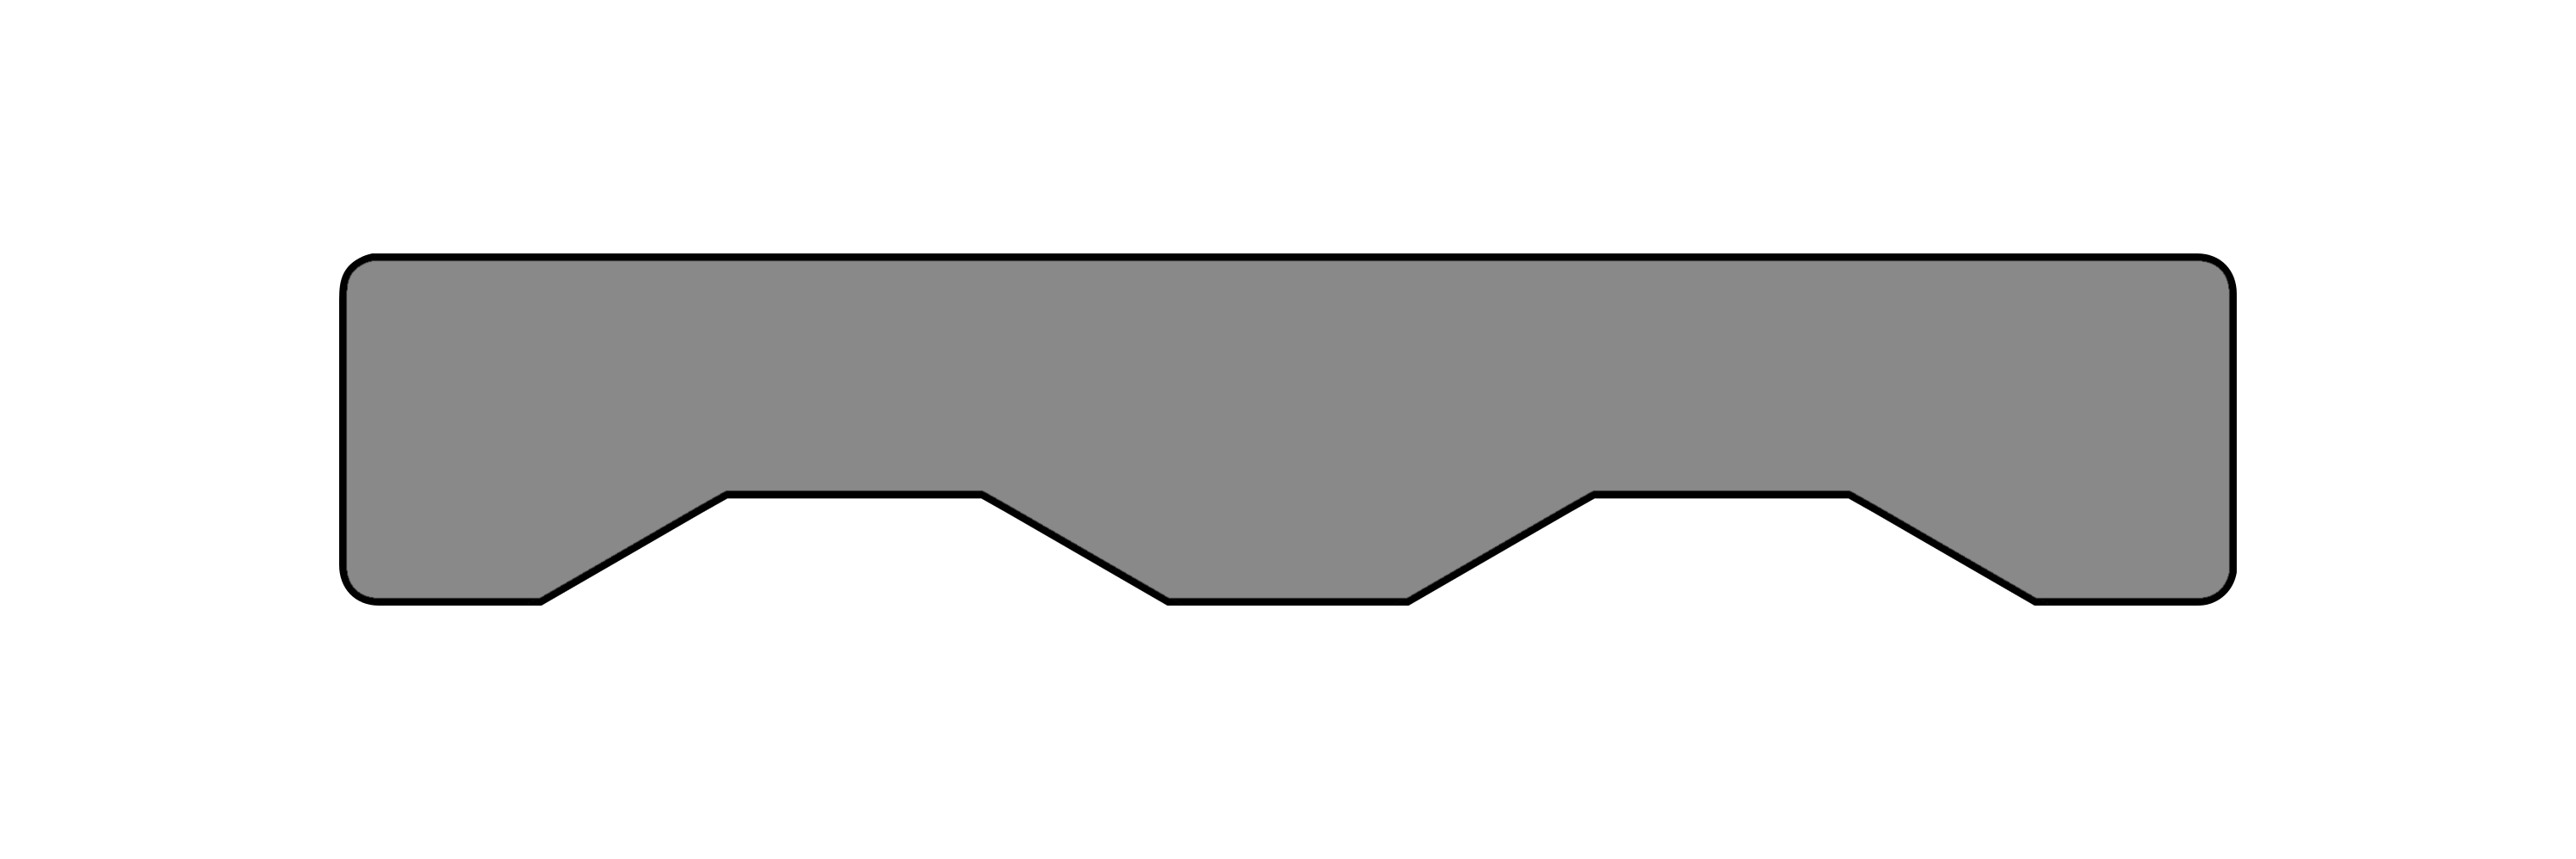 Trapeze scalloped decking profile